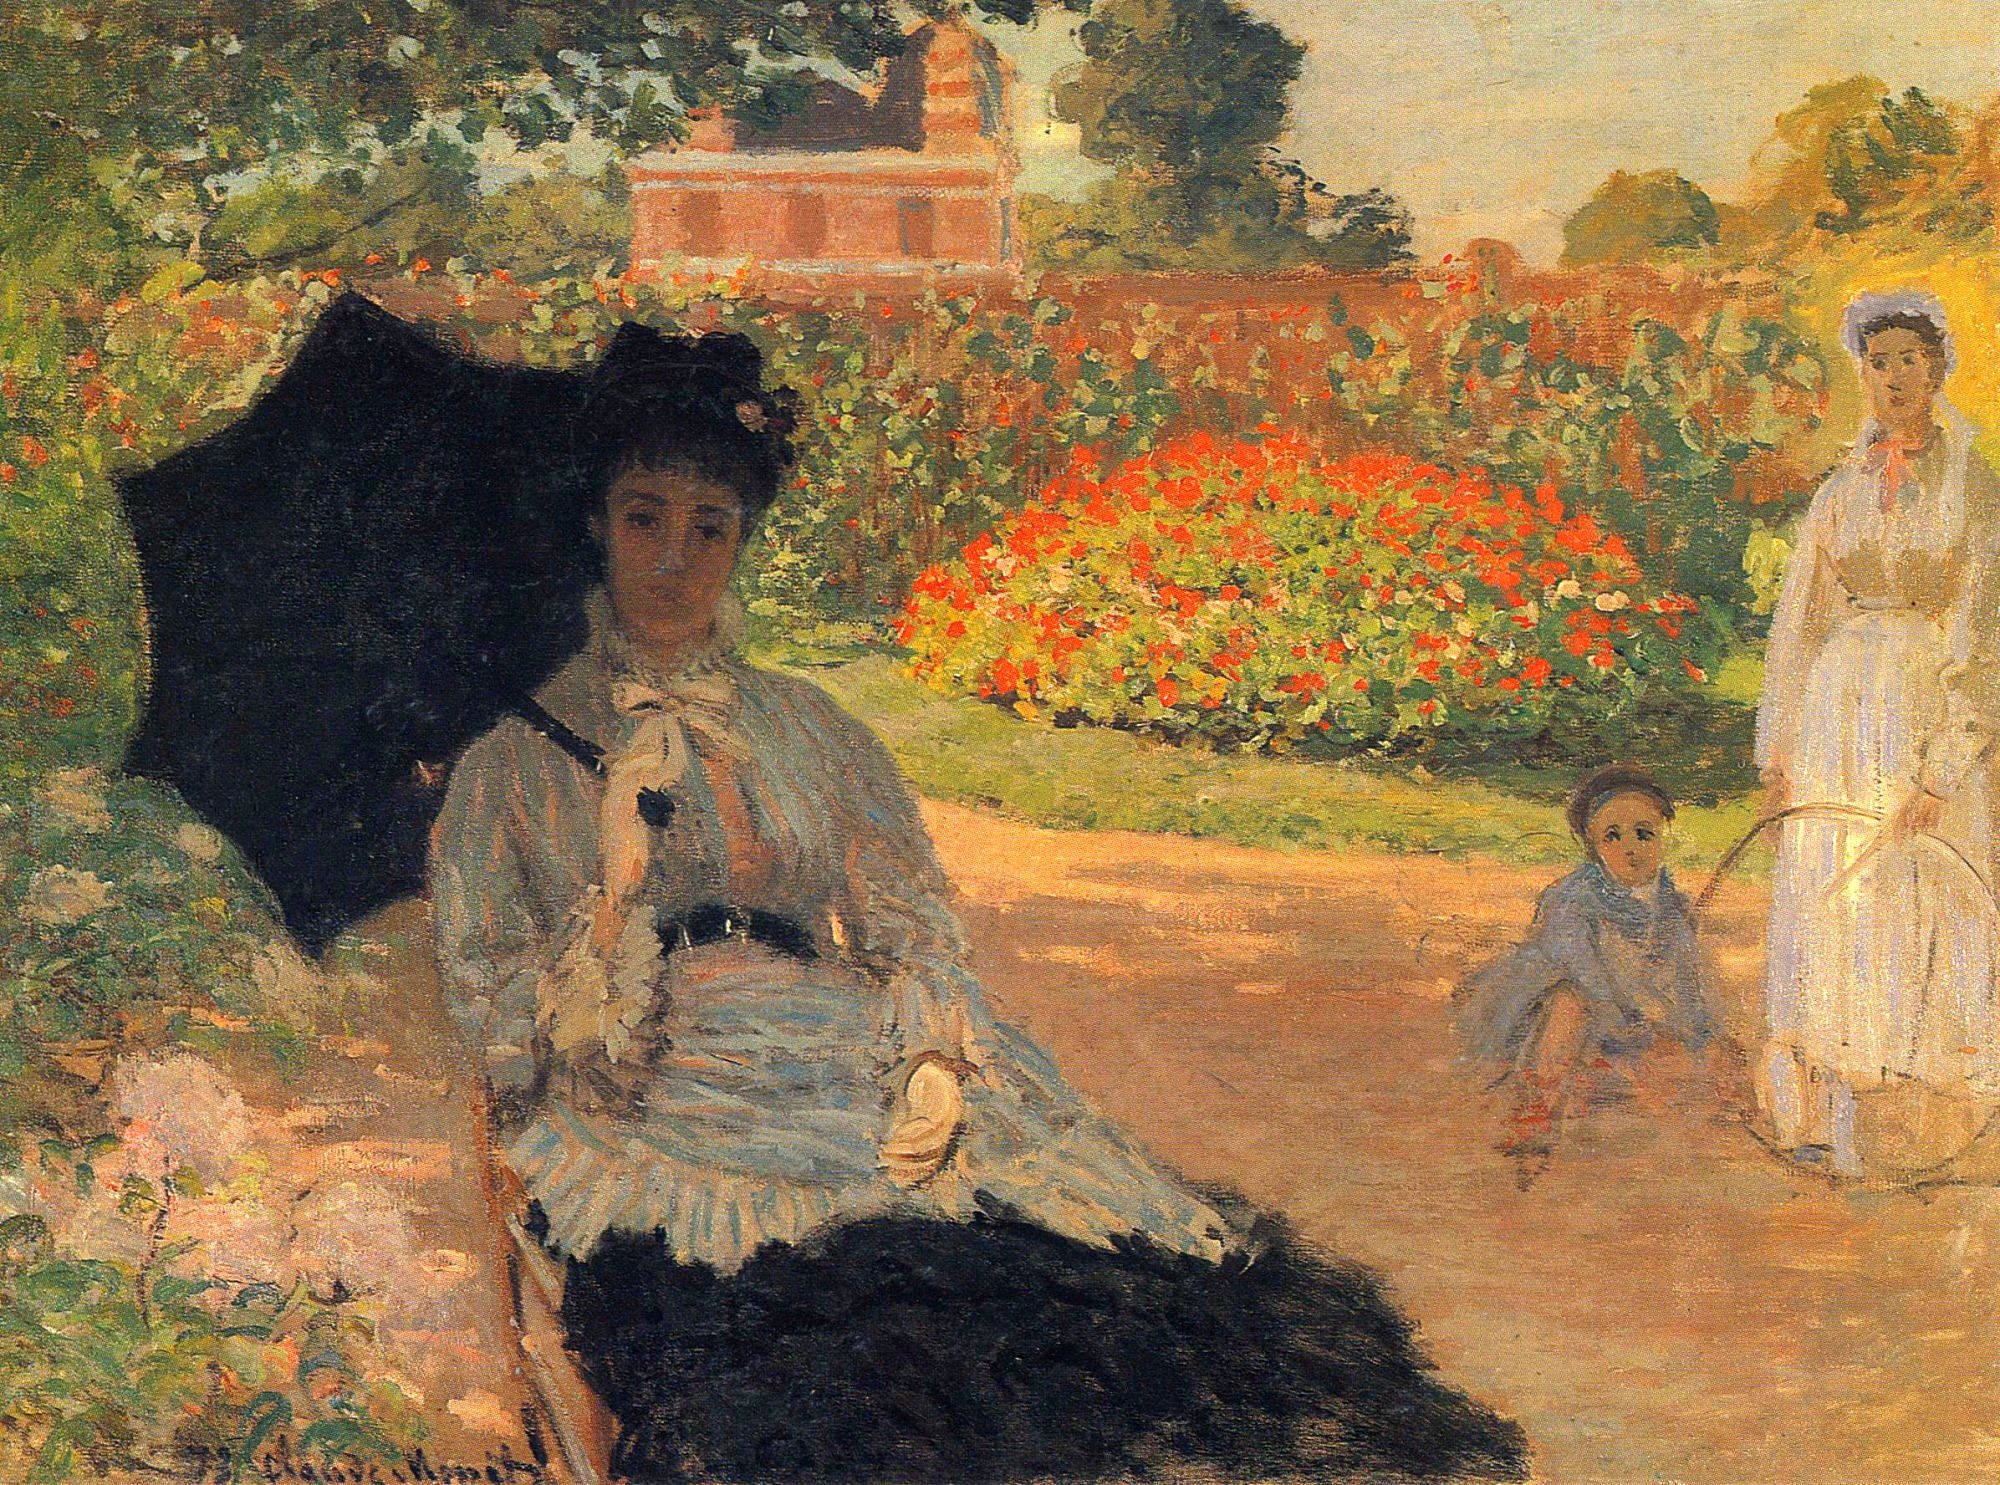 Camille Monet in the Garden by Claude Monet - 1873 - 79.5 x 59 cm Foundation E.G. Bührle